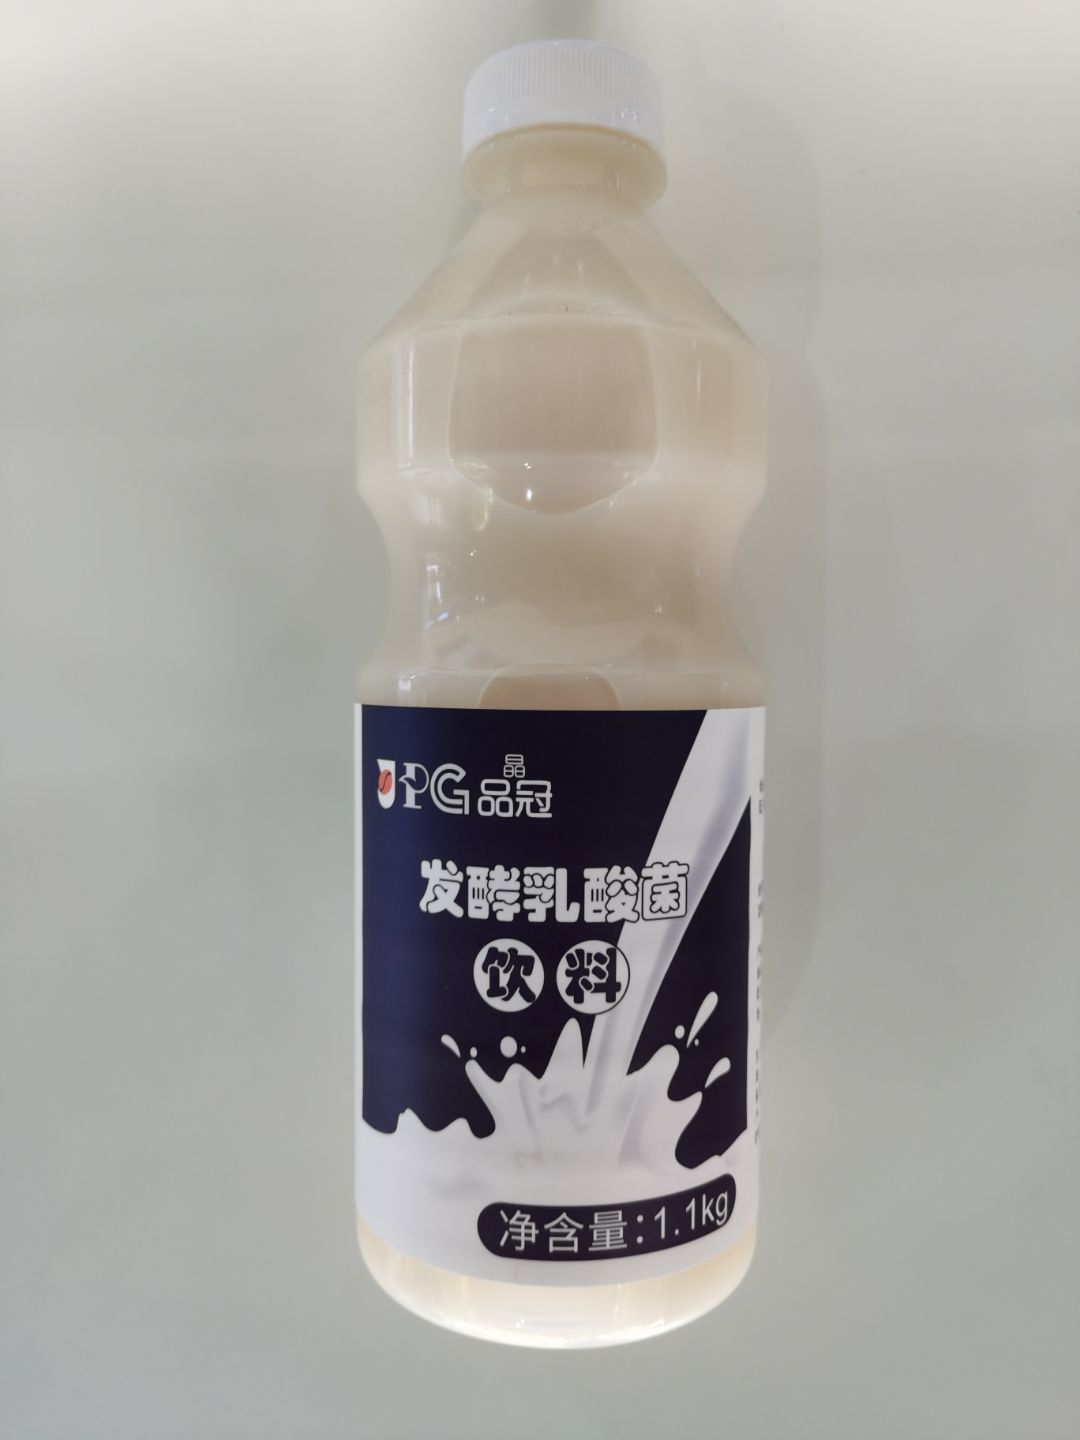 024drinks Jingpin Guang Fermented Lactobacillus Drink 